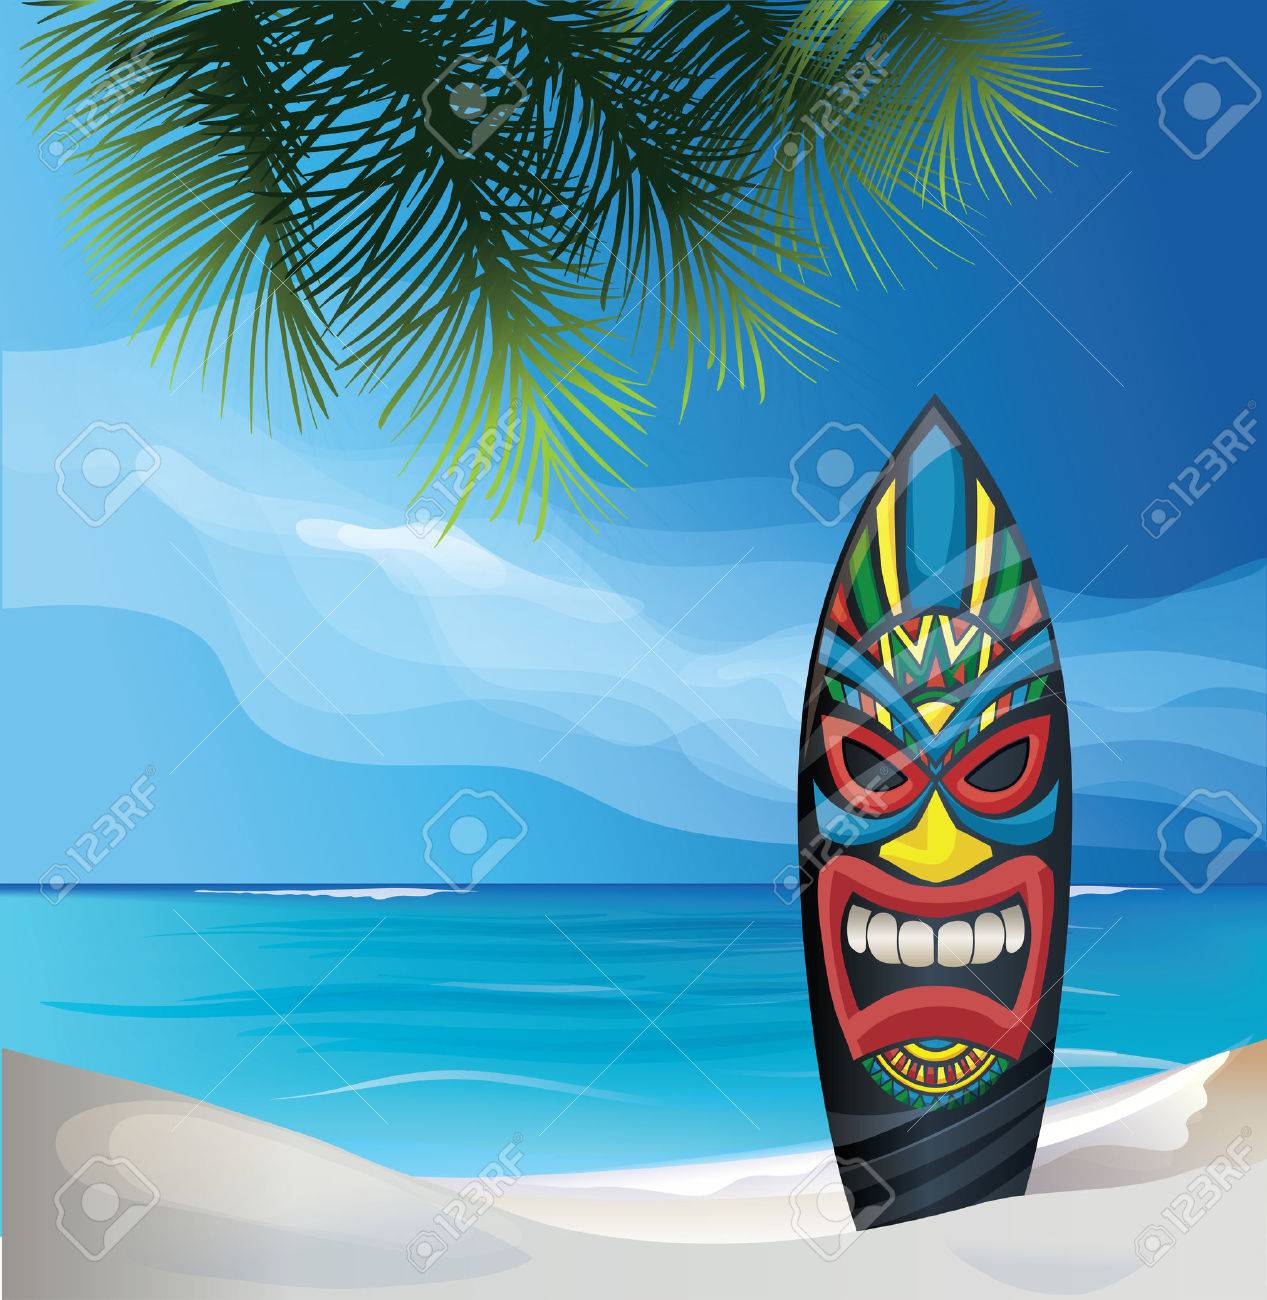 Background Design With Tiki Warrior Mask Surfboard On